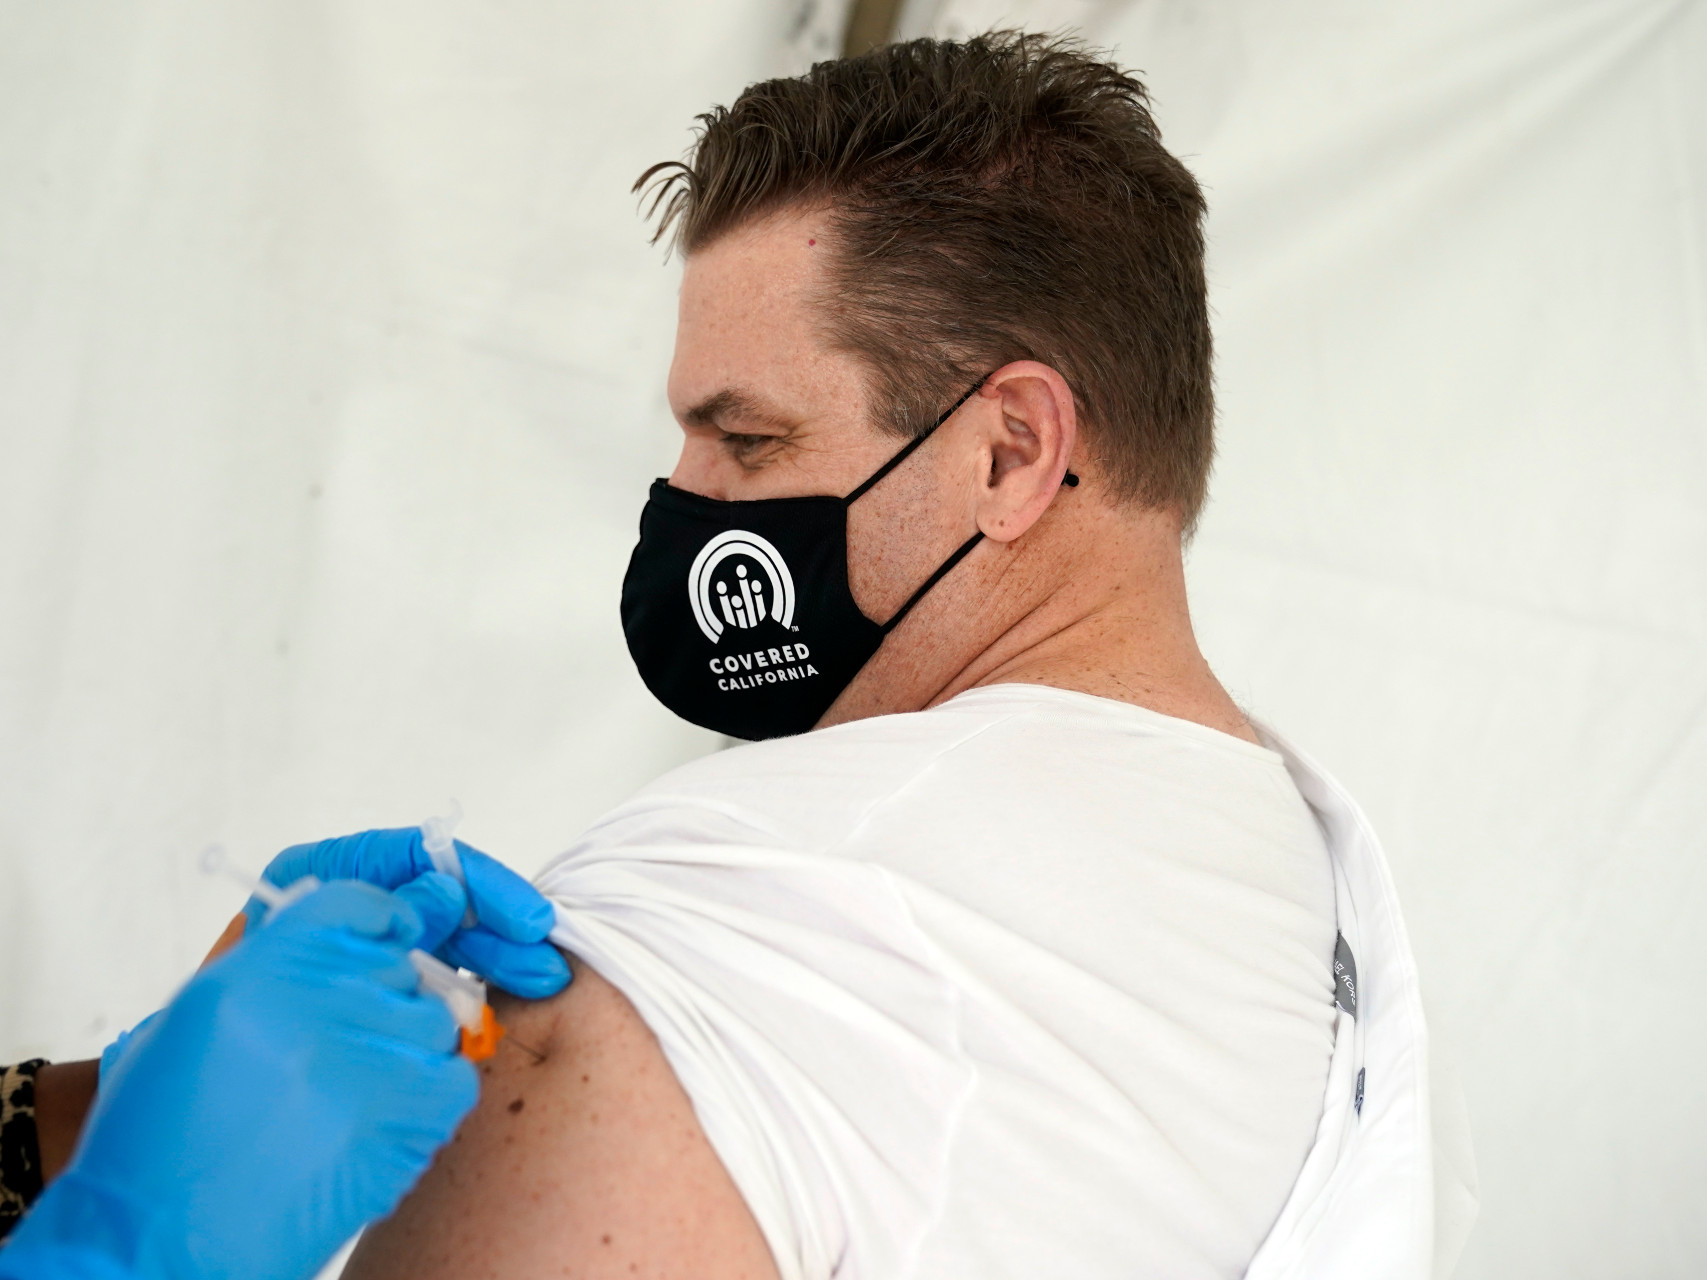 https://www.capradio.org/media/12257105/021221_covered-california-mask-vaccinate-shot-p.jpg